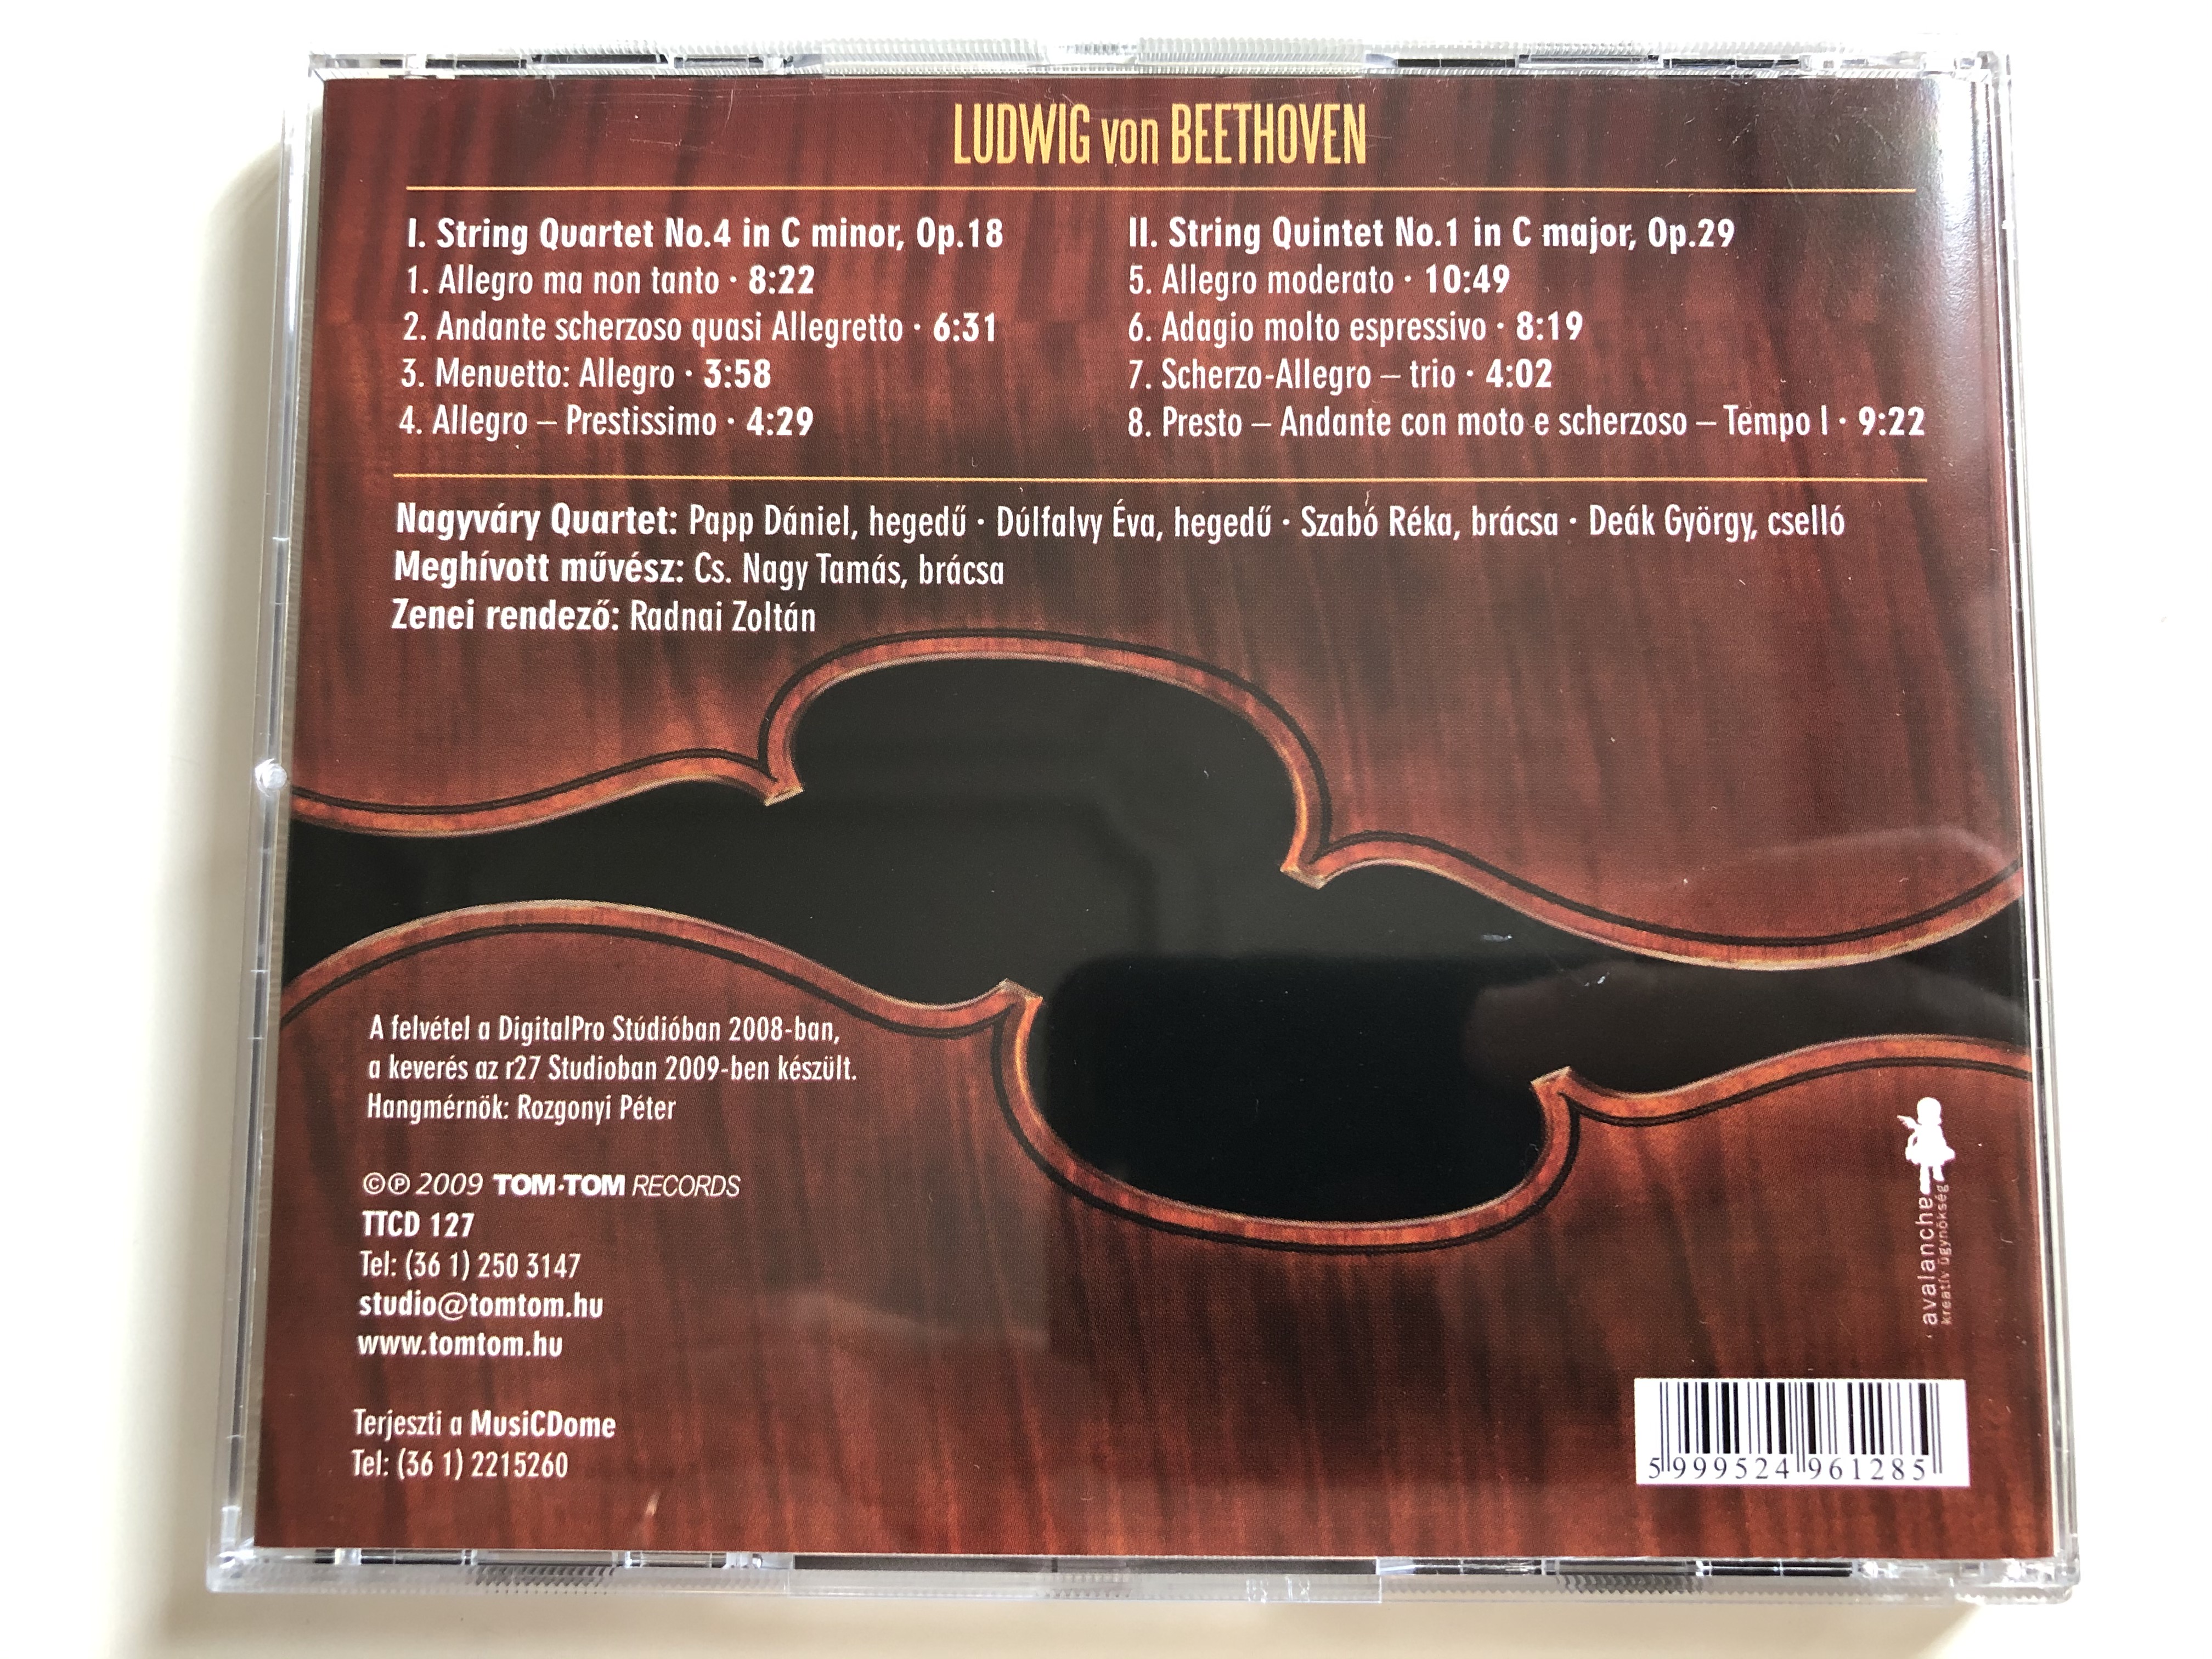 nagyvary-quartet-ludwig-von-beethoven-i.-string-quartet-no.-4-in-c-minor-op.-18-ii.-string-quartet-no.-1-in-c-major-op.-29-tom-tom-records-audio-cd-2009-ttcd-127-6-.jpg